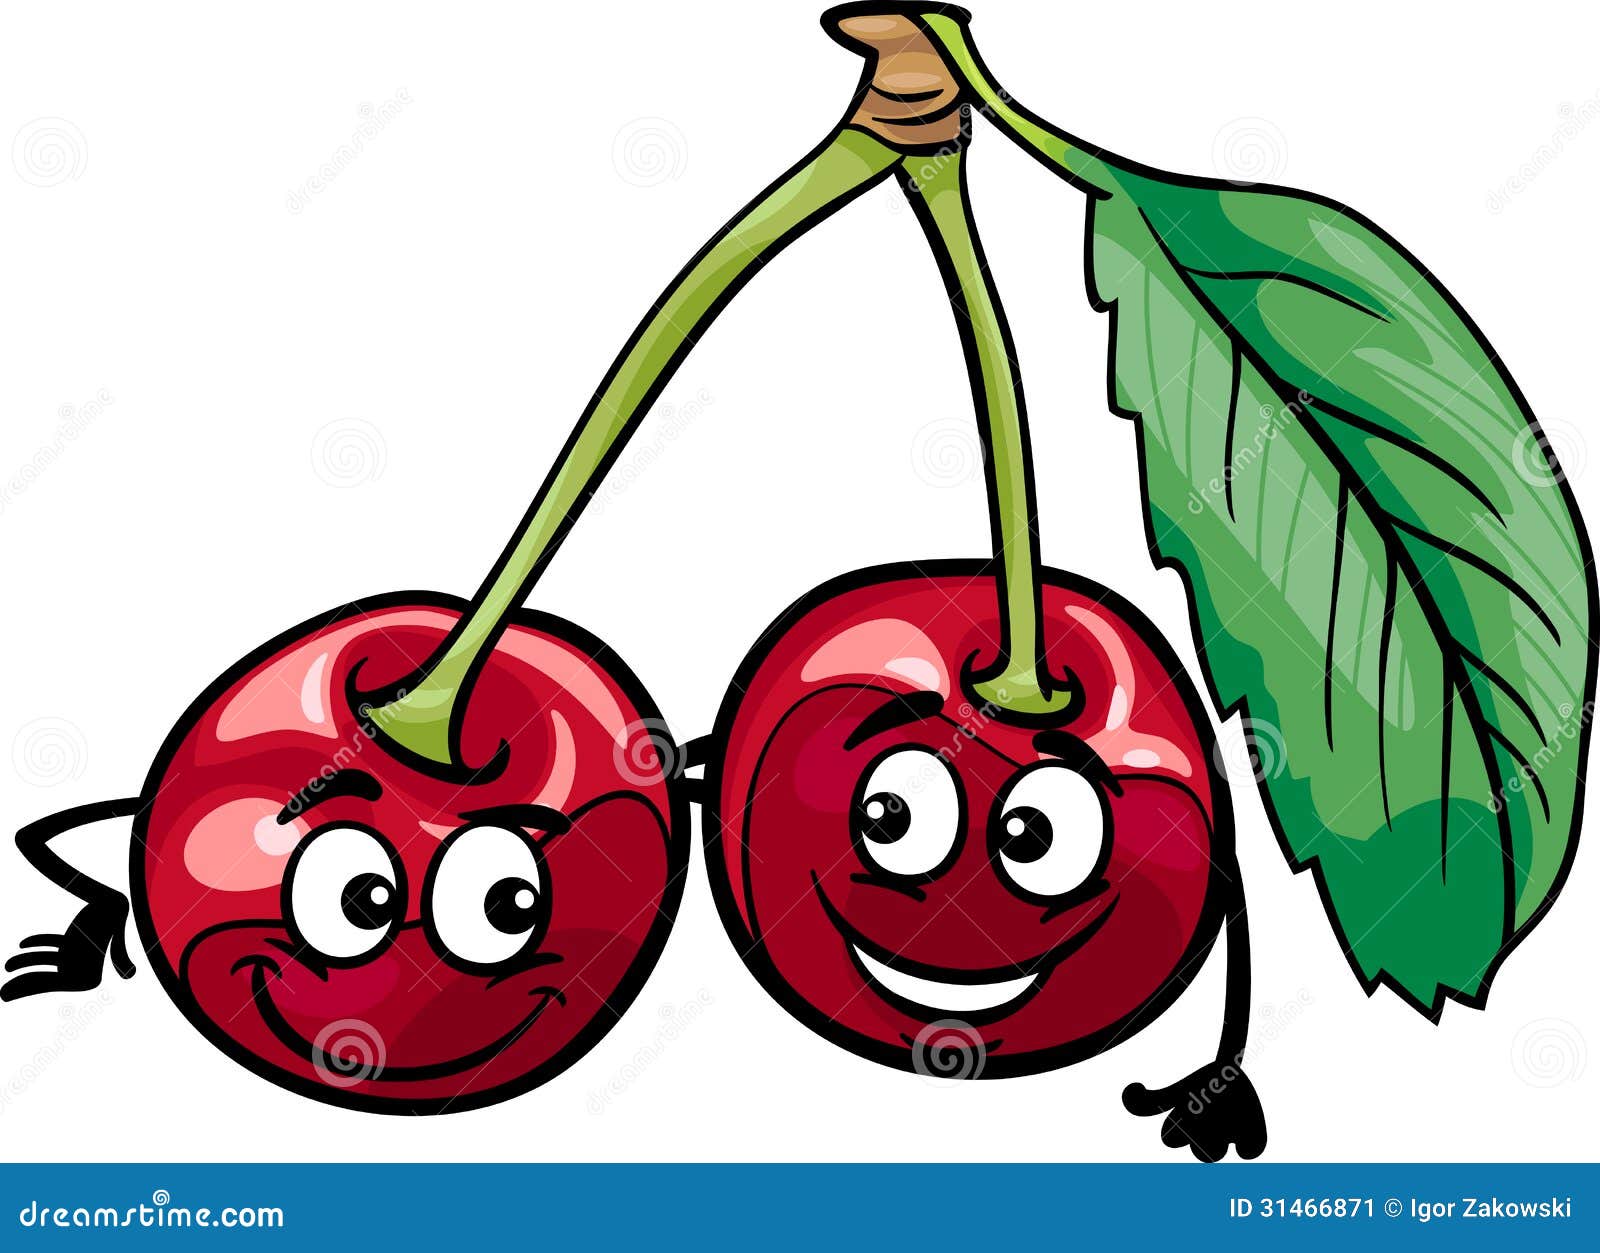 cherry cartoon images